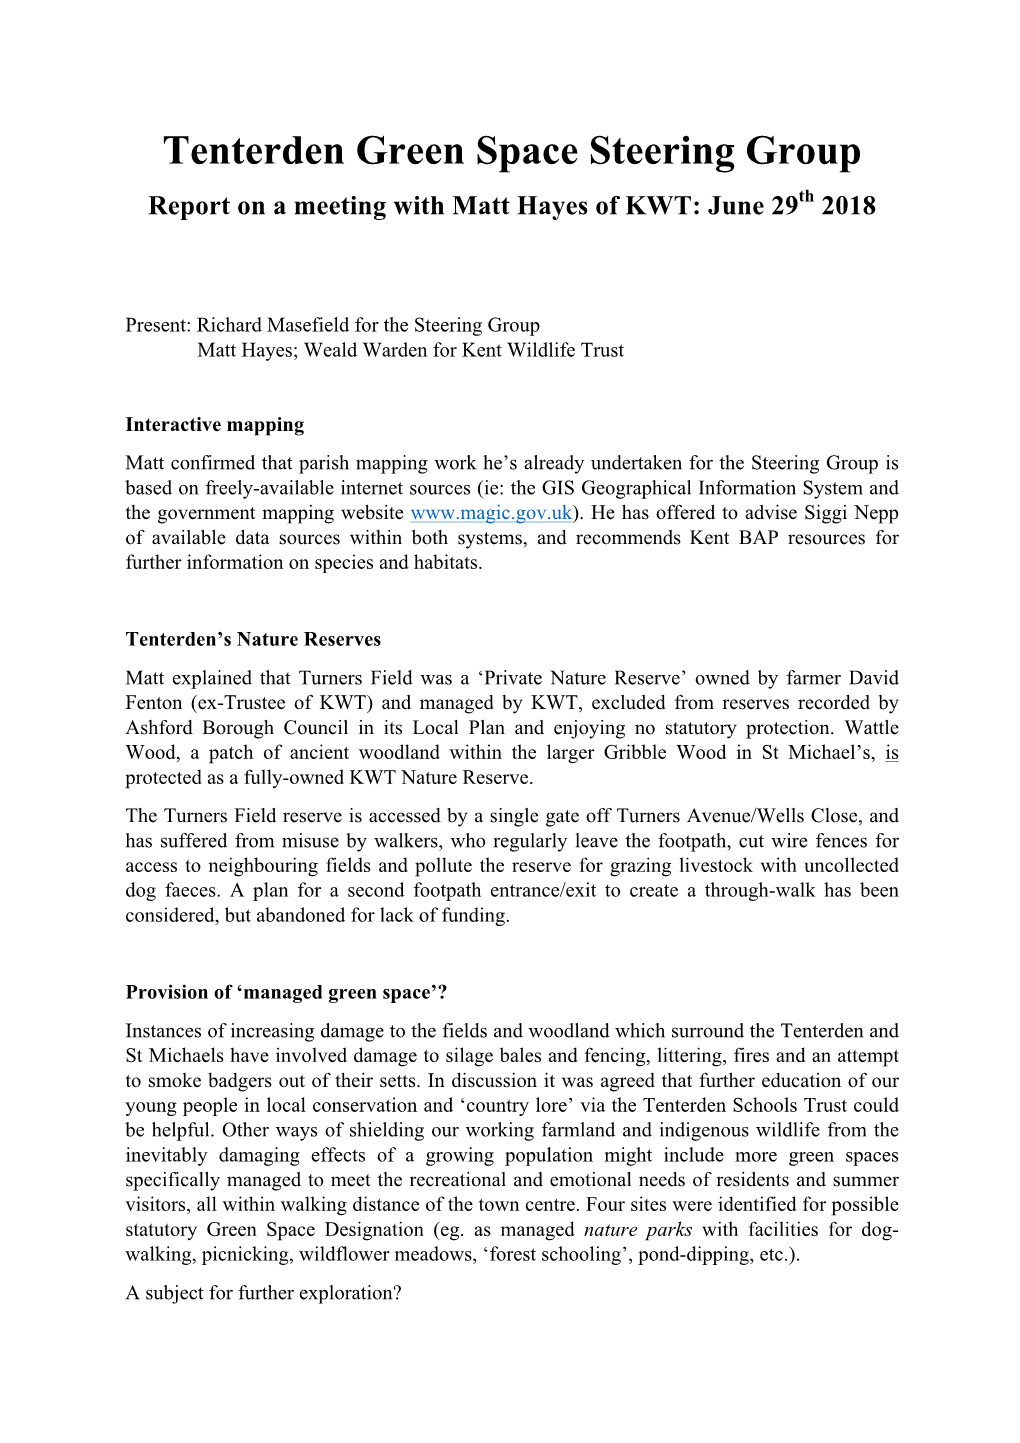 Tenterden Green Space Steering Group Report (PDF, 83Kb)